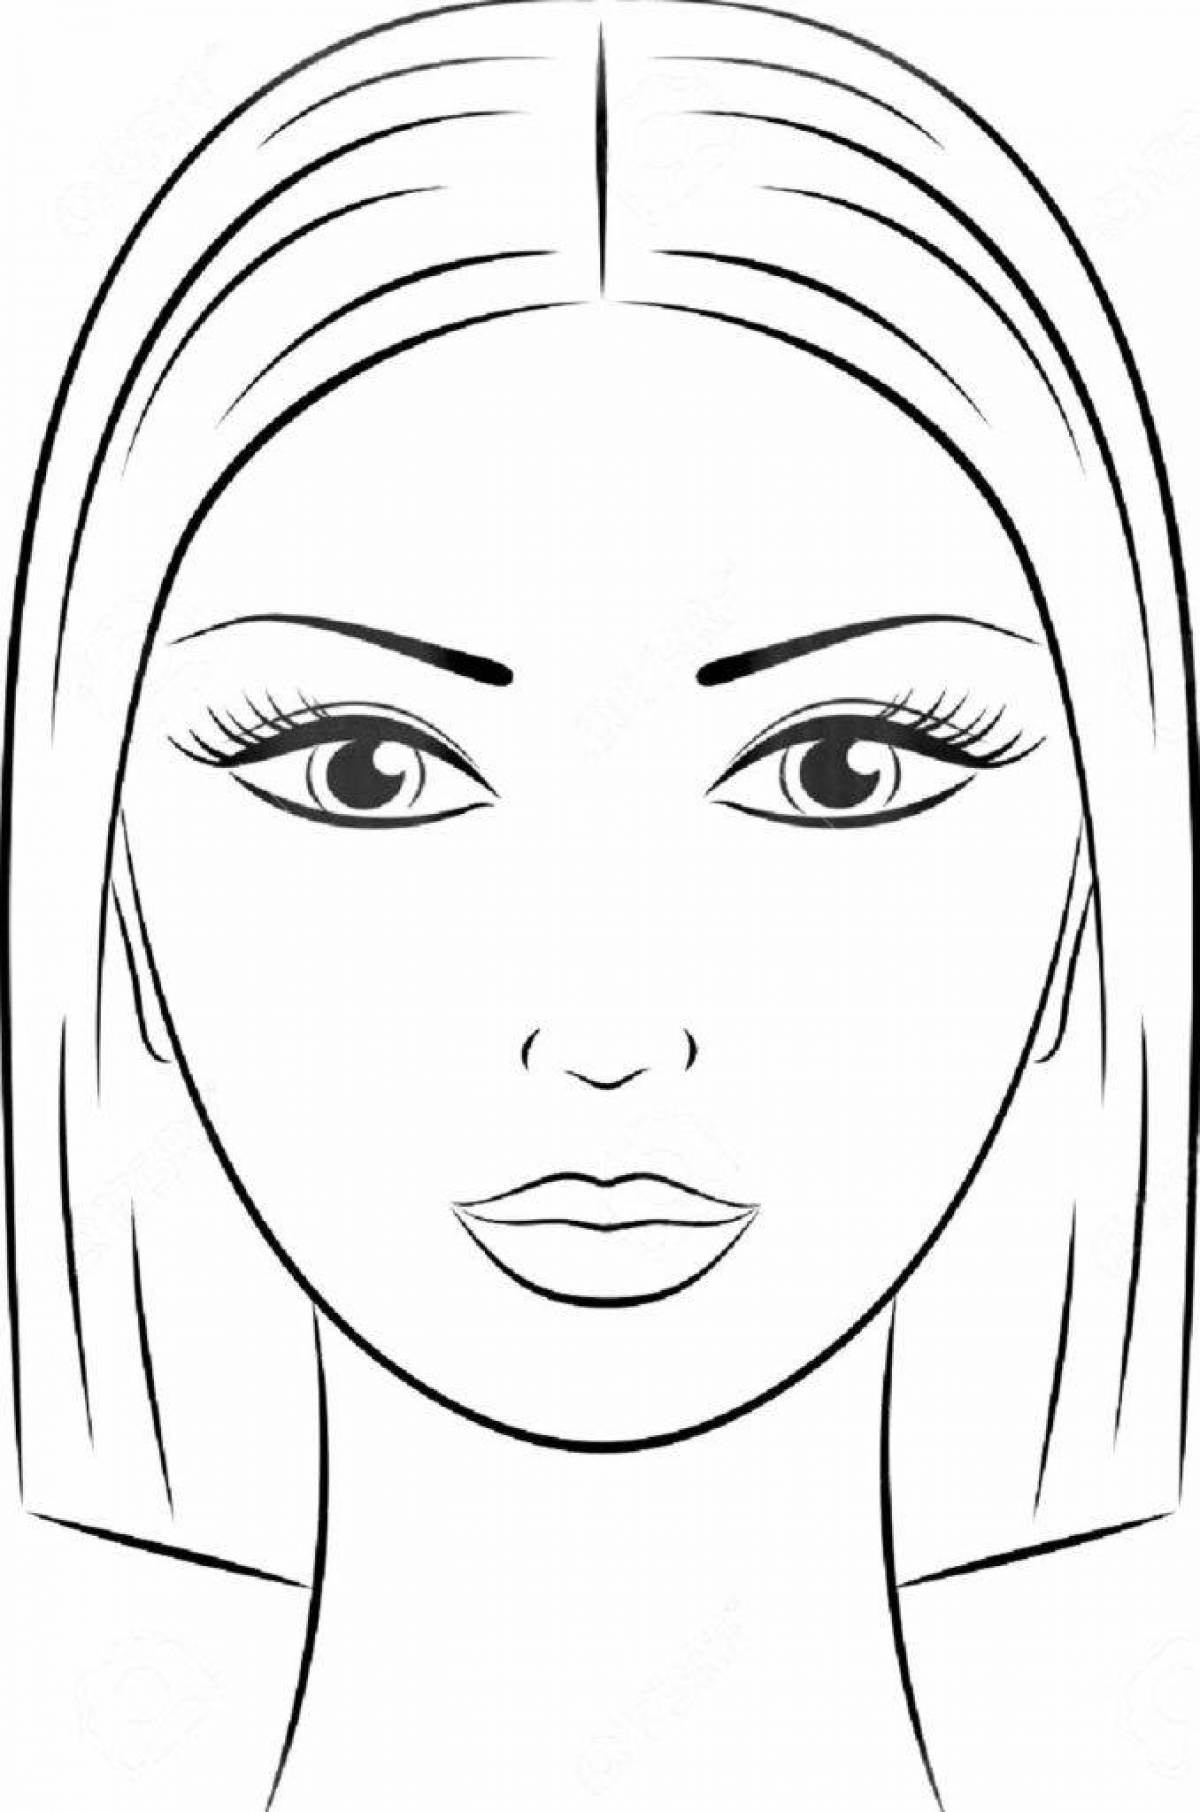 Glitzy coloring page макияж для лица для девочек